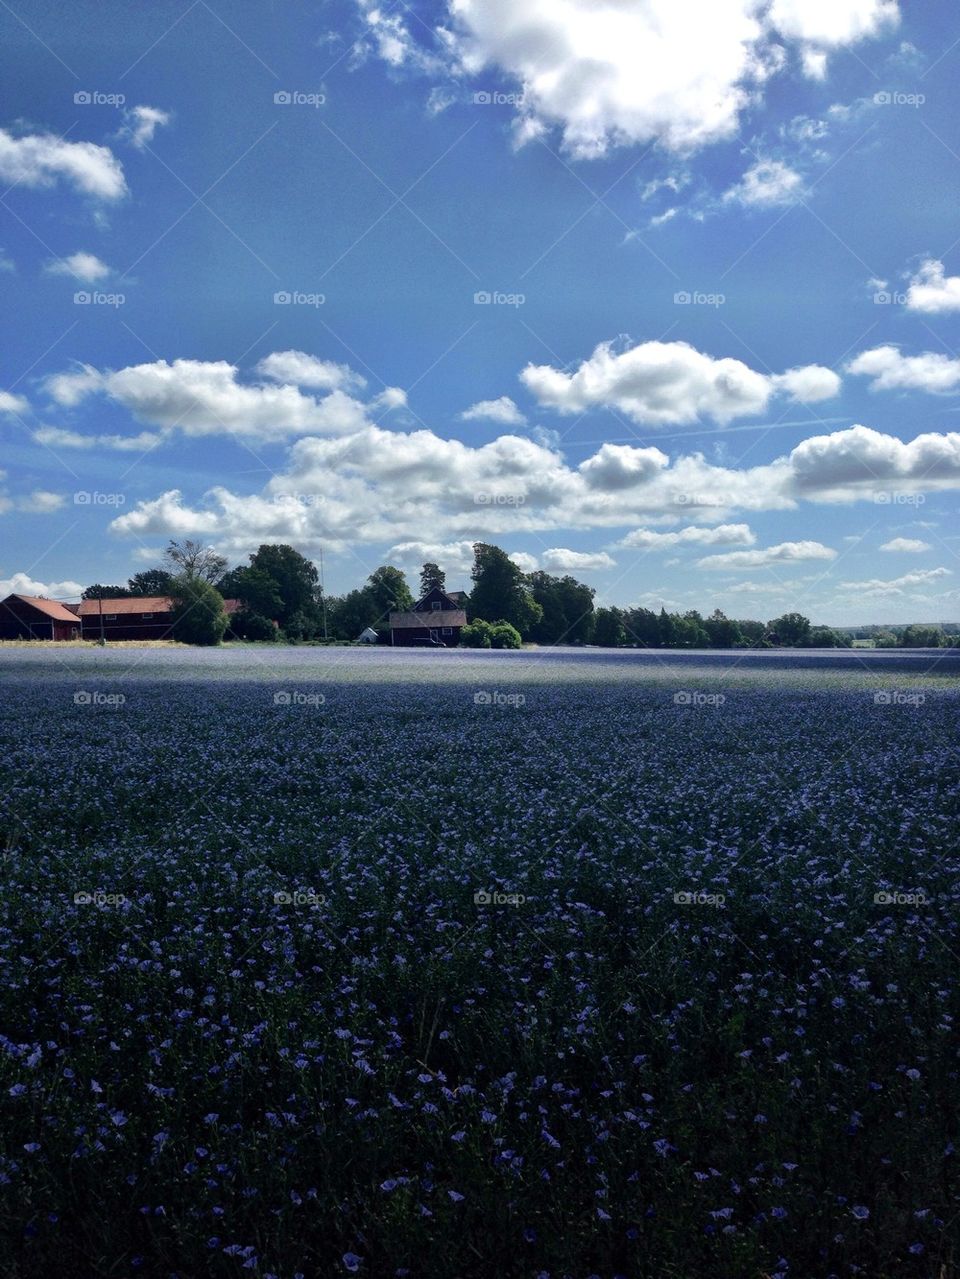 Blue flowers in the meadow